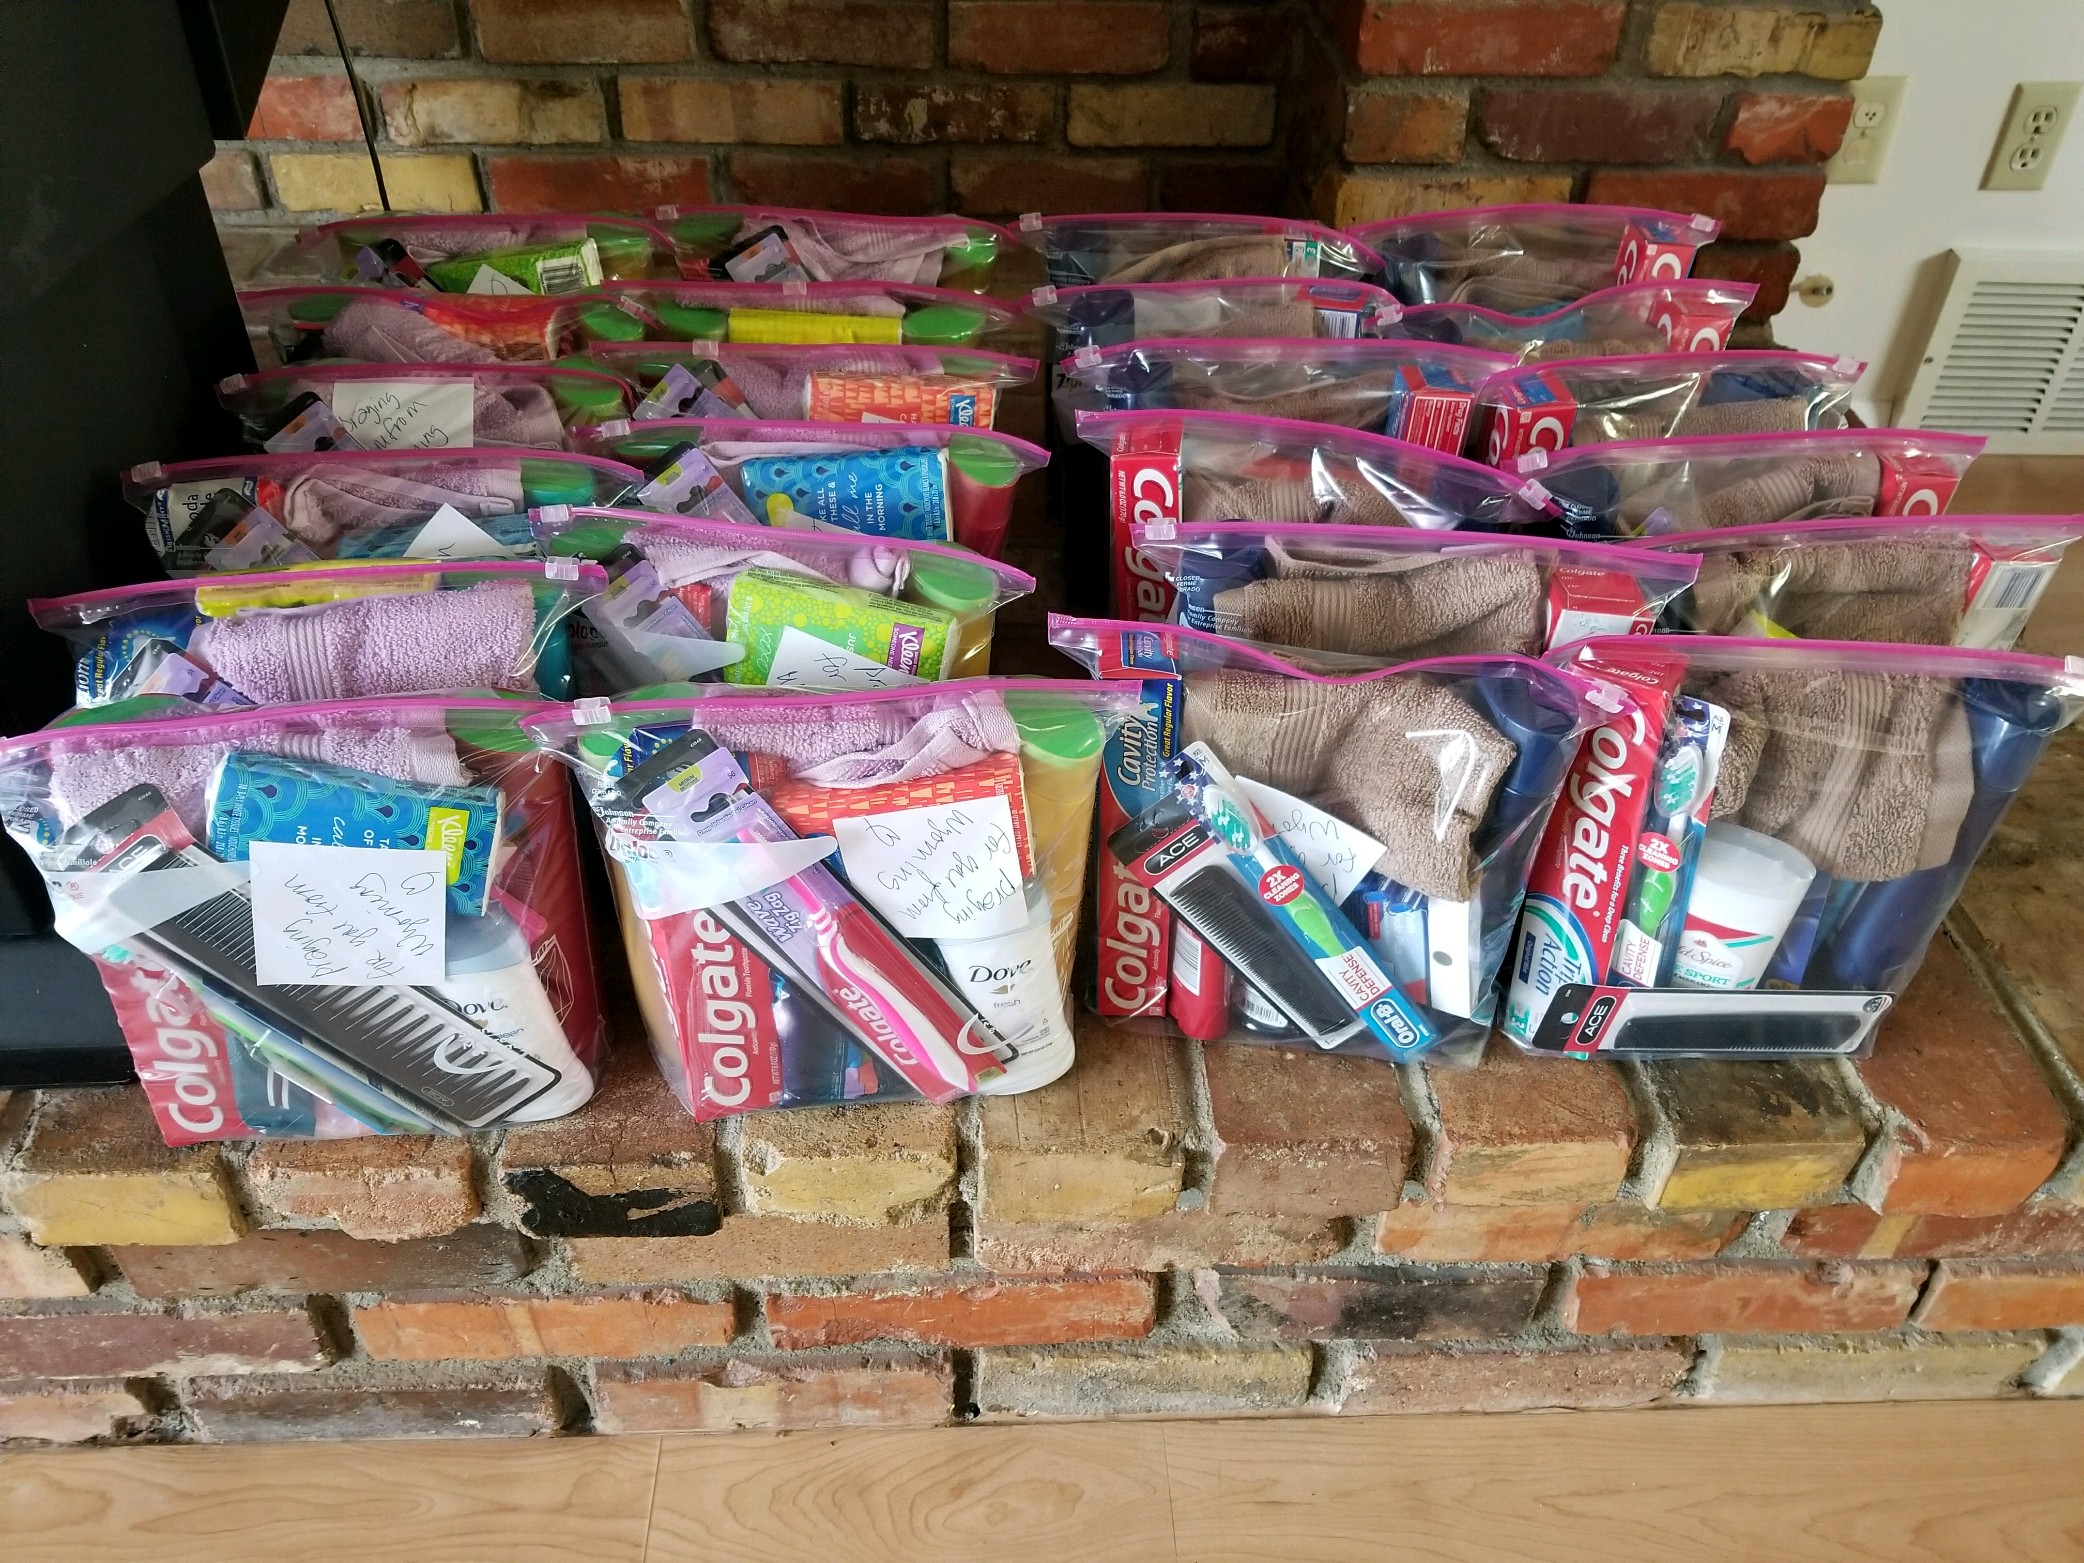 Redi & Community prepare hygiene kits for Texas